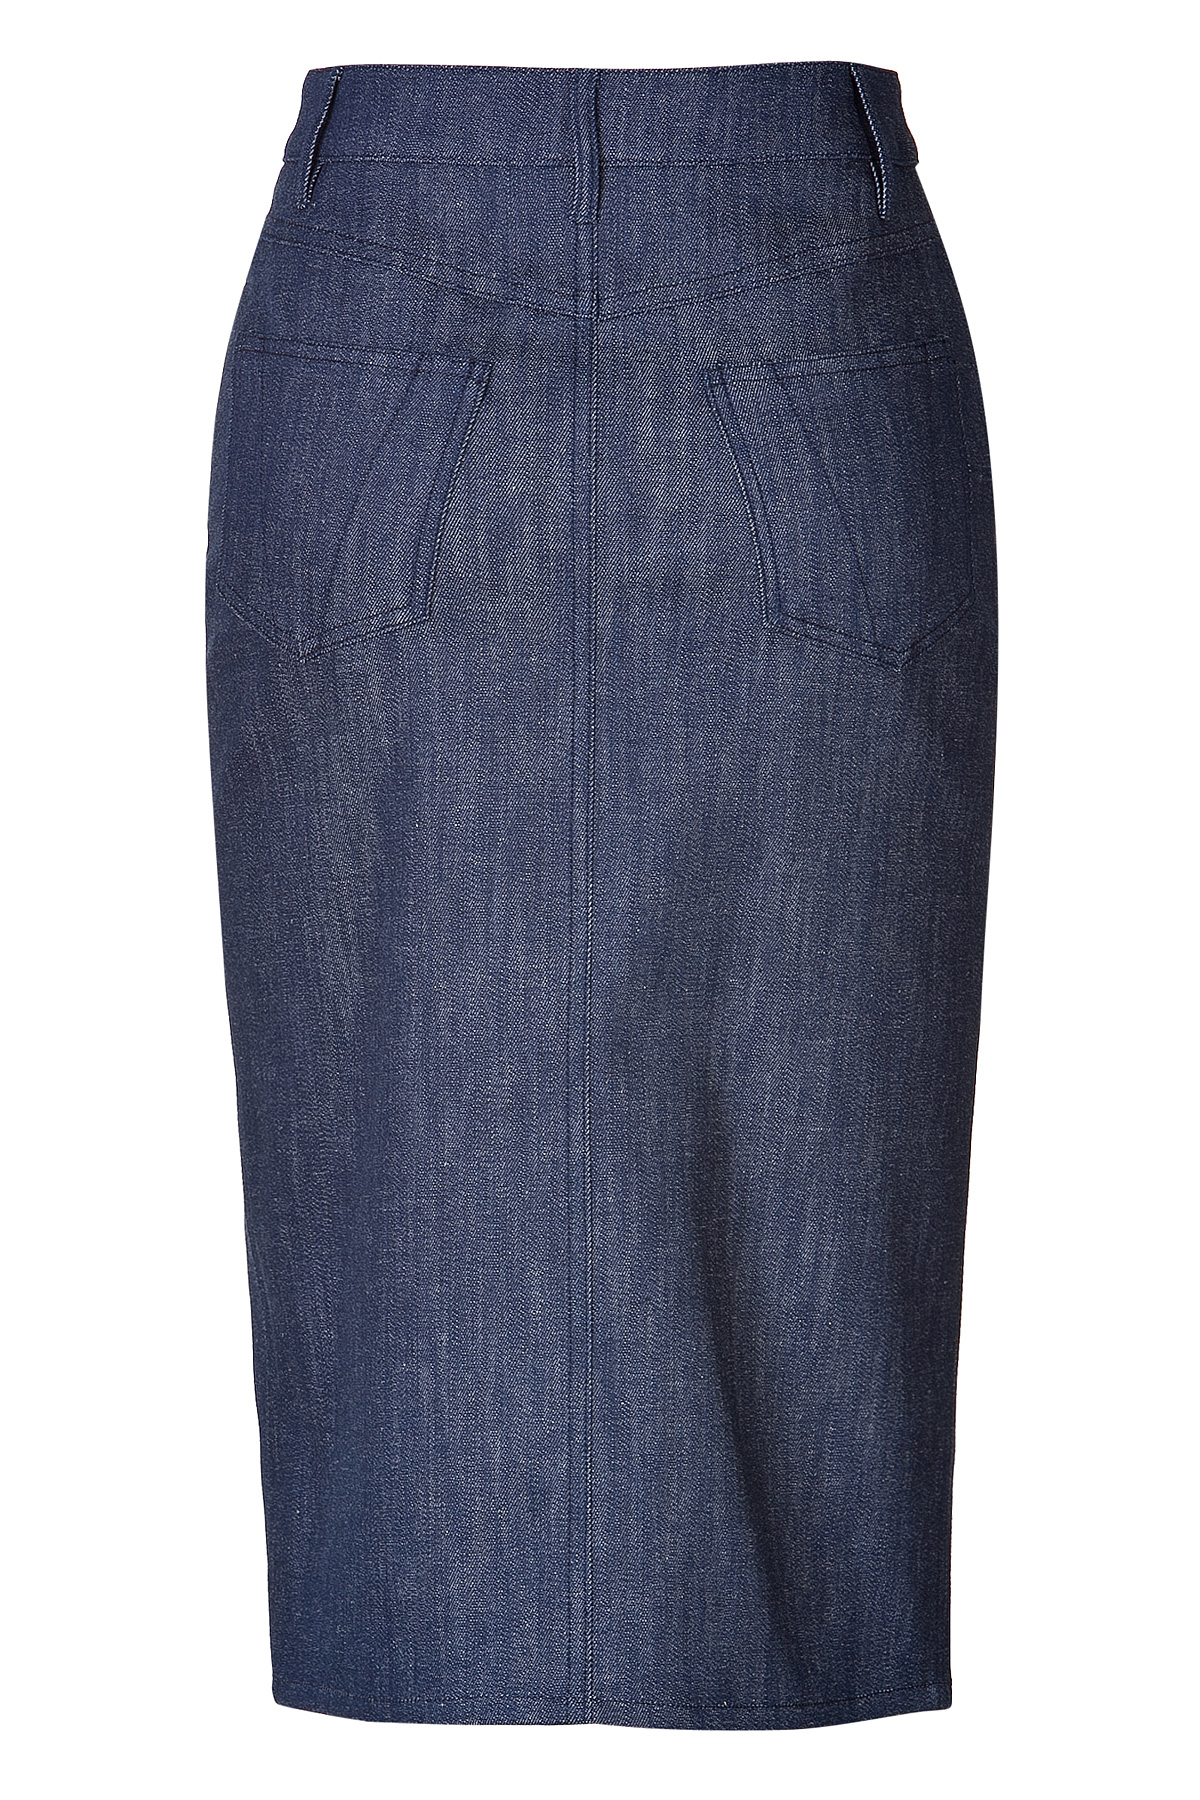 Lyst - Victoria beckham Highwaisted Denim Pencil Skirt in Blue